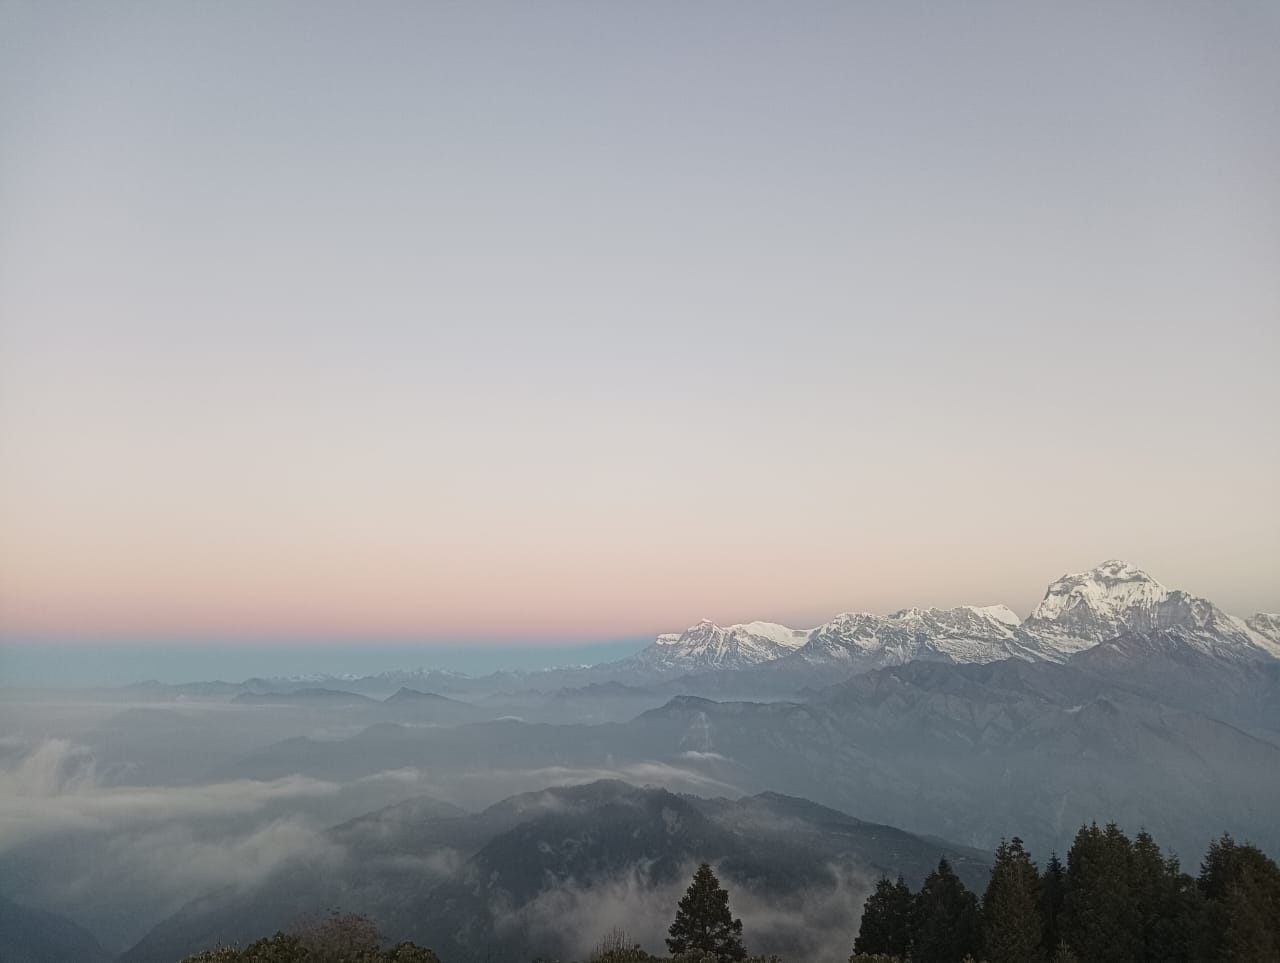 tourhub | Swotah Travel and Adventure | Annapurna Poonhill Trek | 7APT